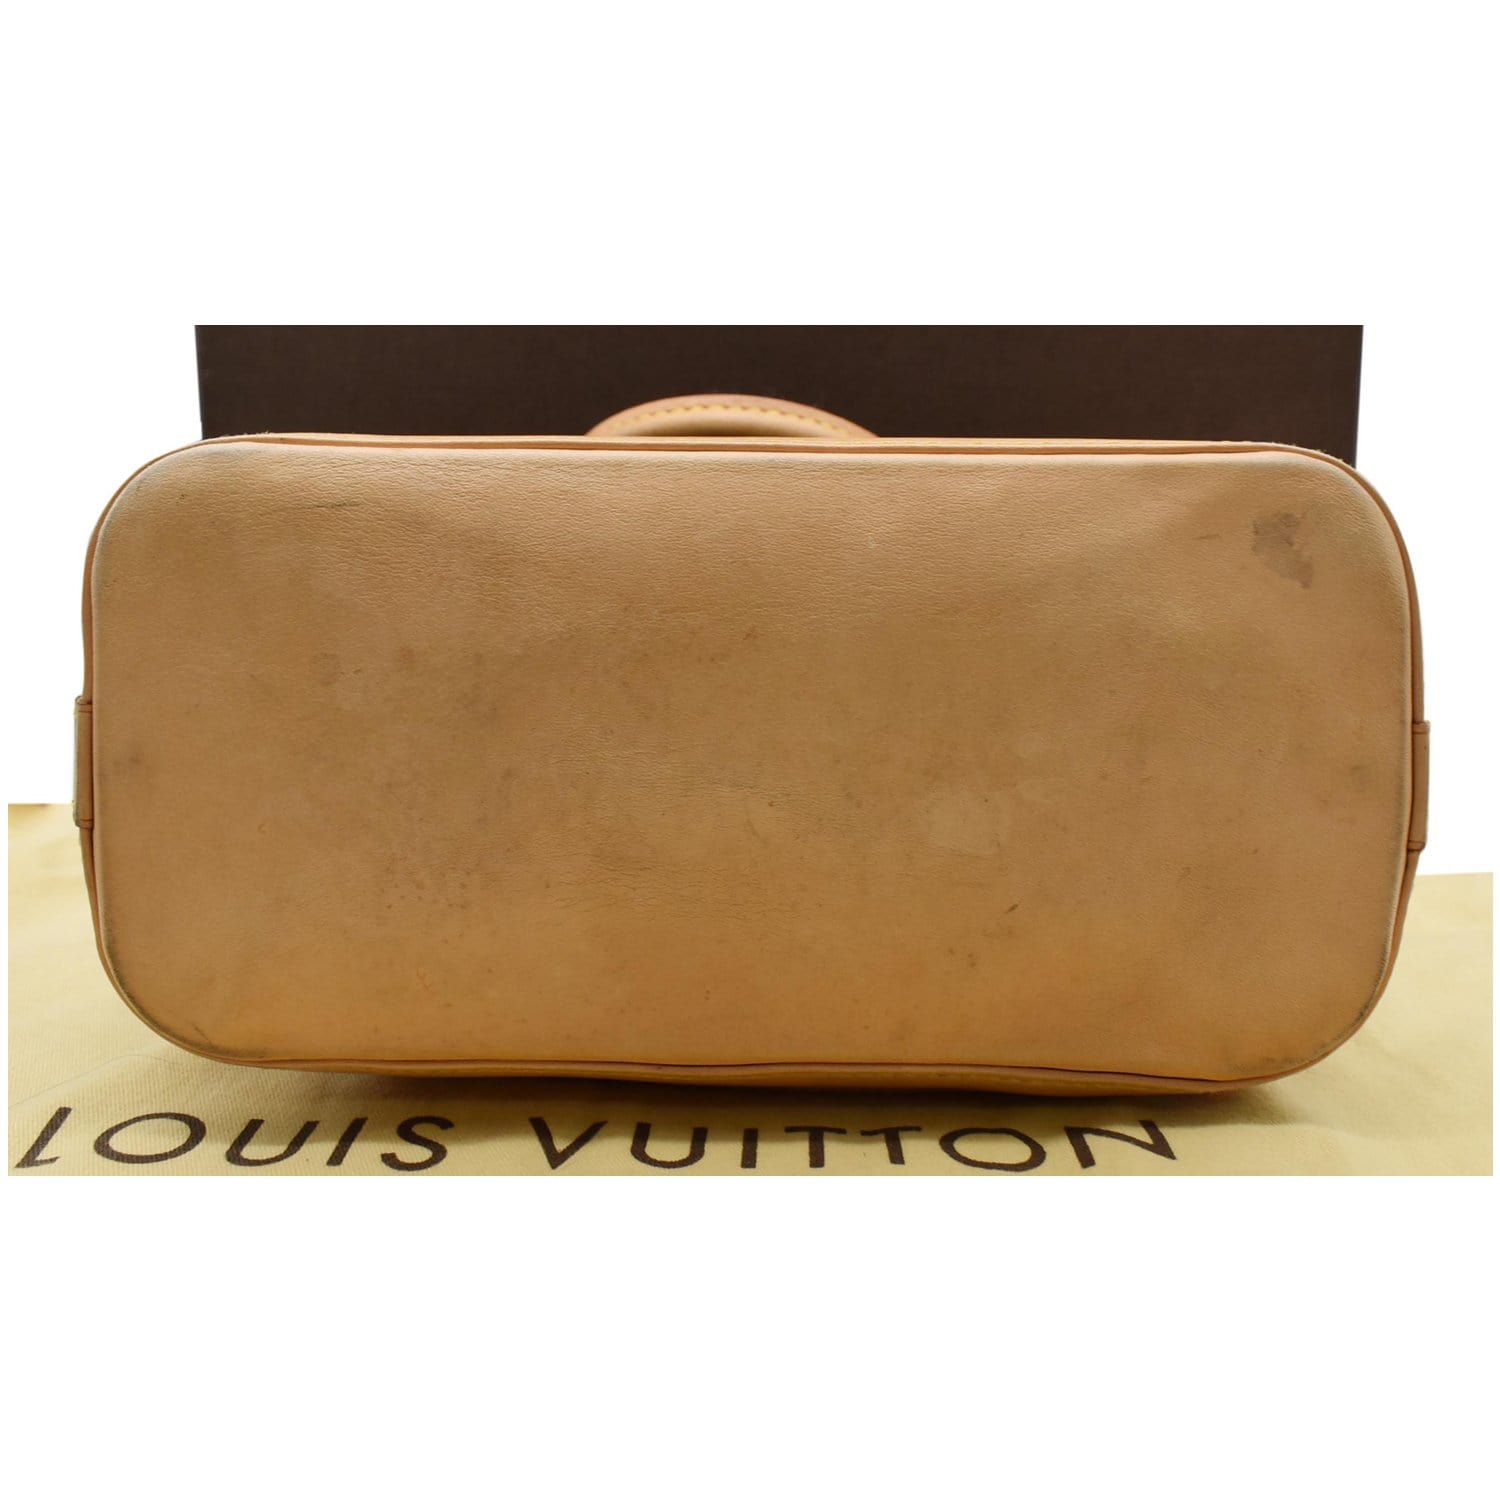 Louis Vuitton Louis Vuitton Lockit Monogram Canvas Handbag